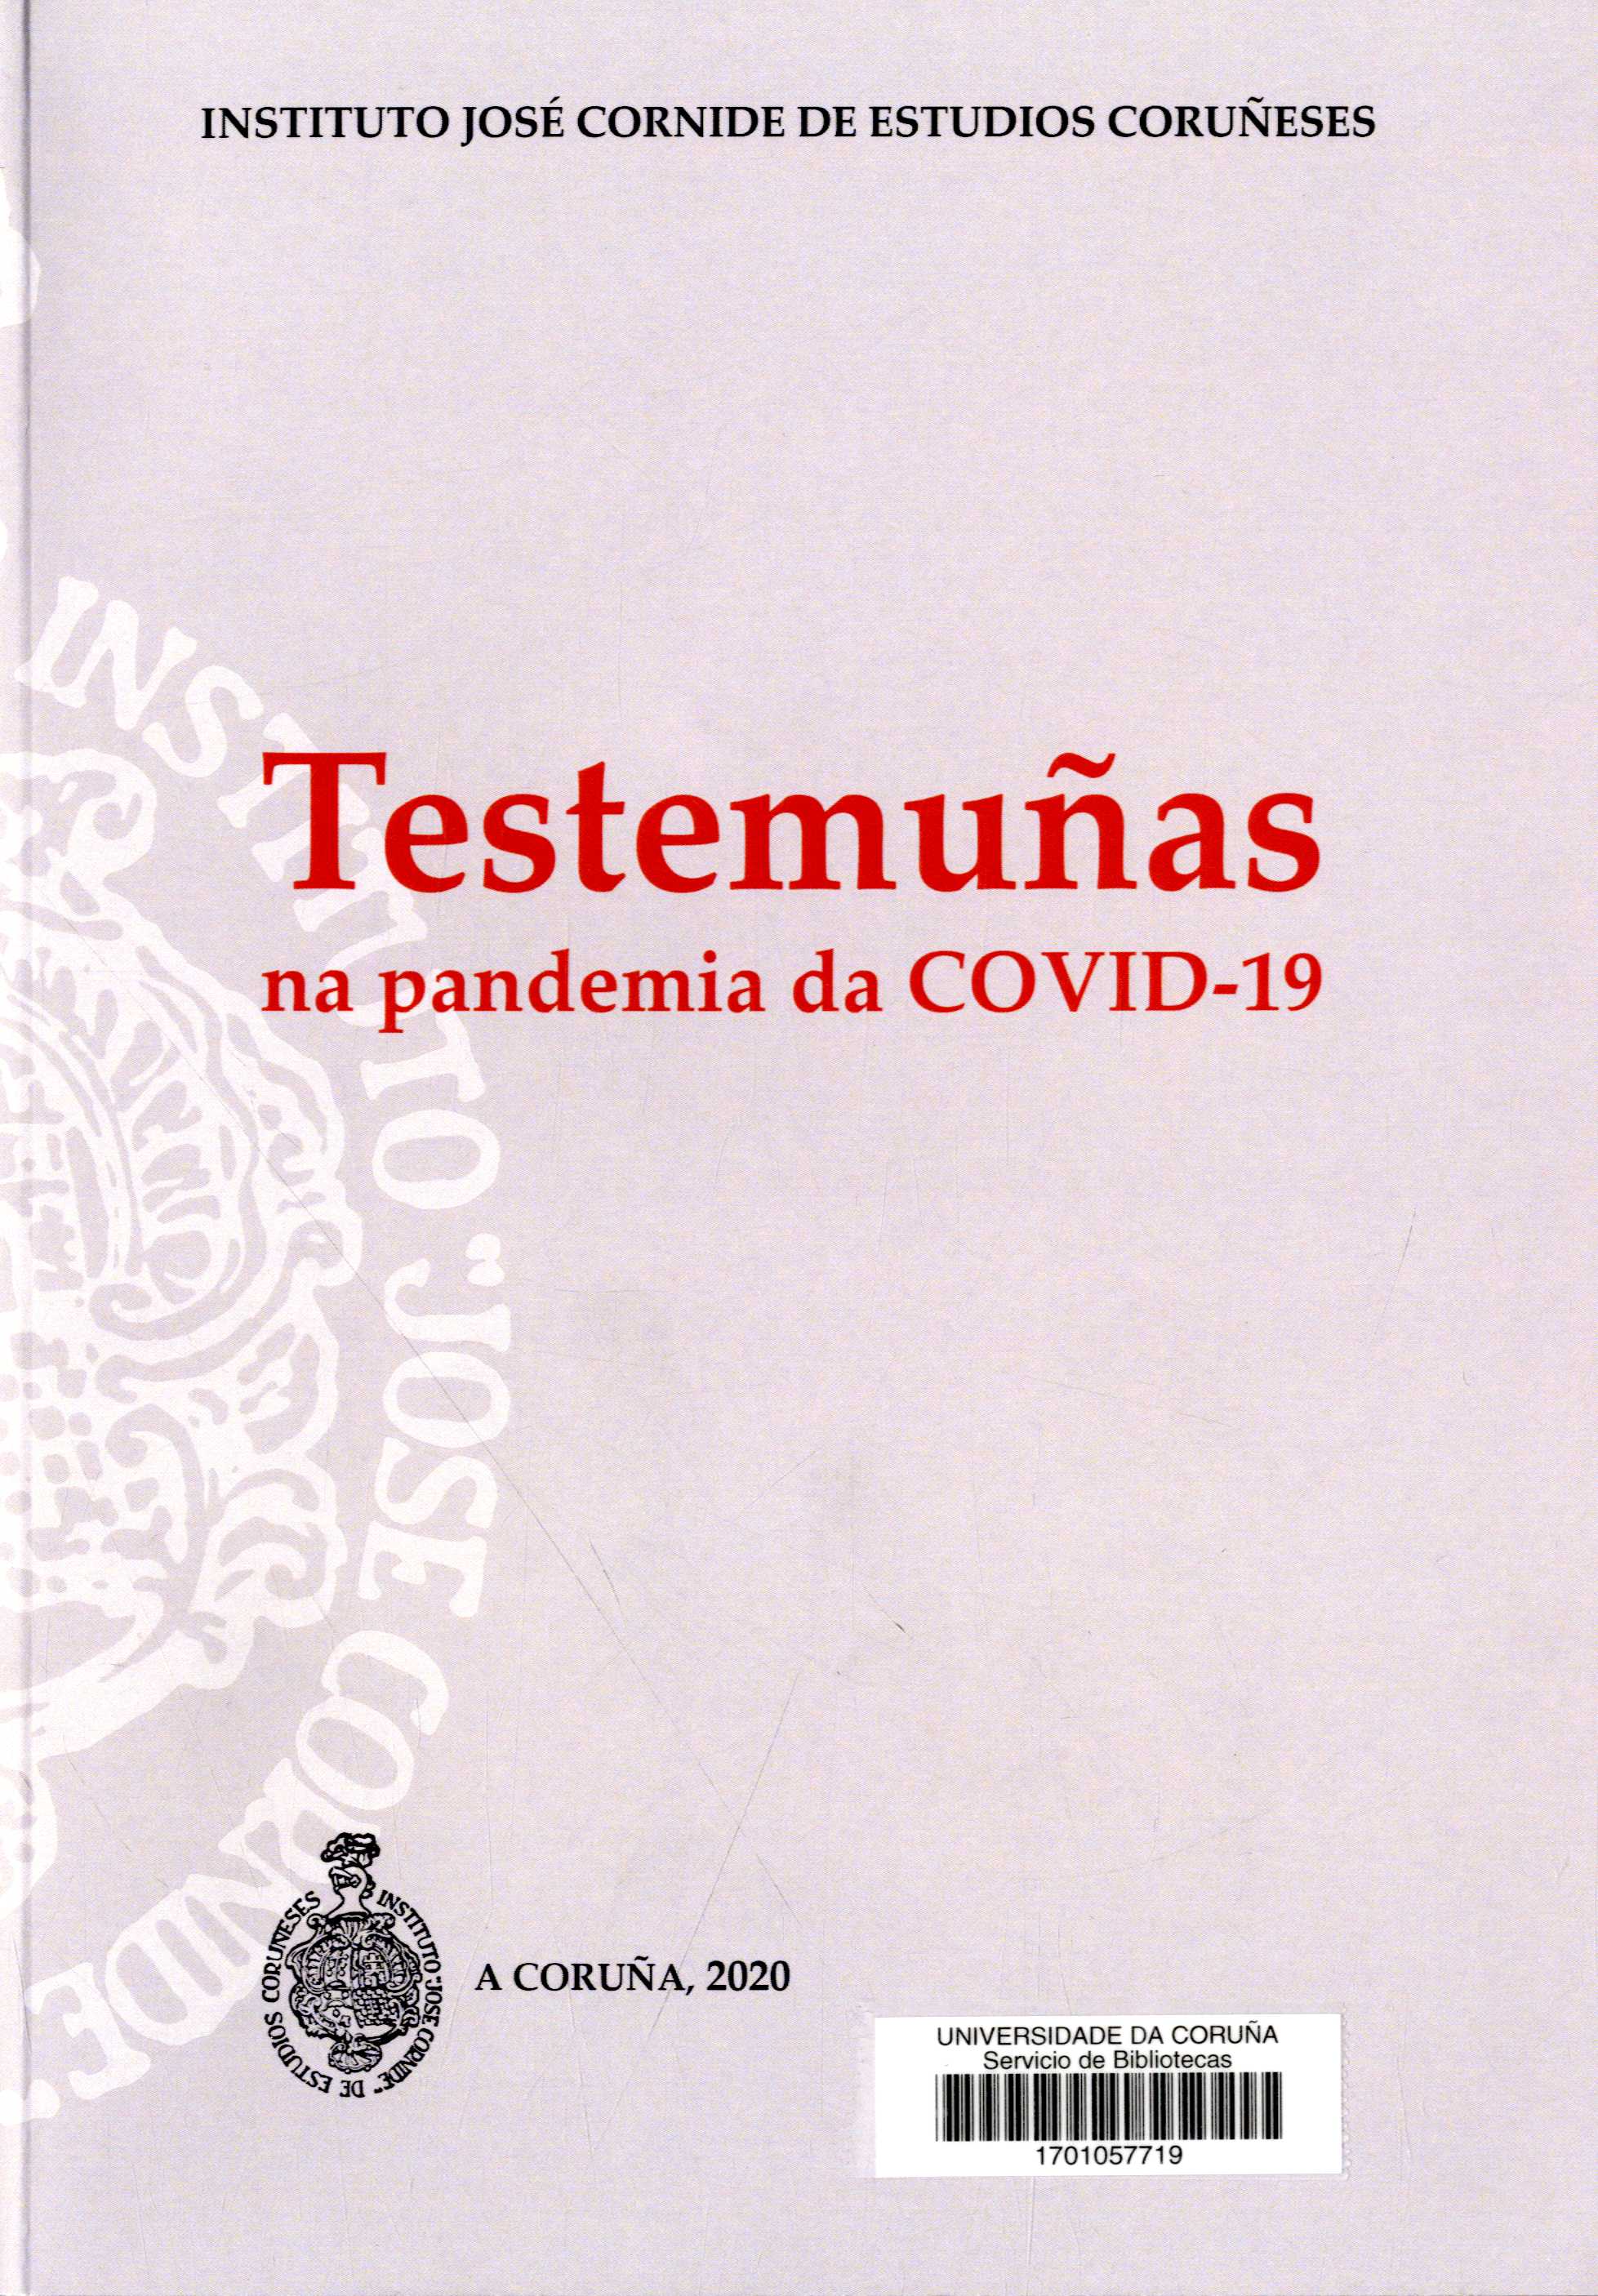 Imagen de portada del libro Testemuñas na pandemia da COVID-19